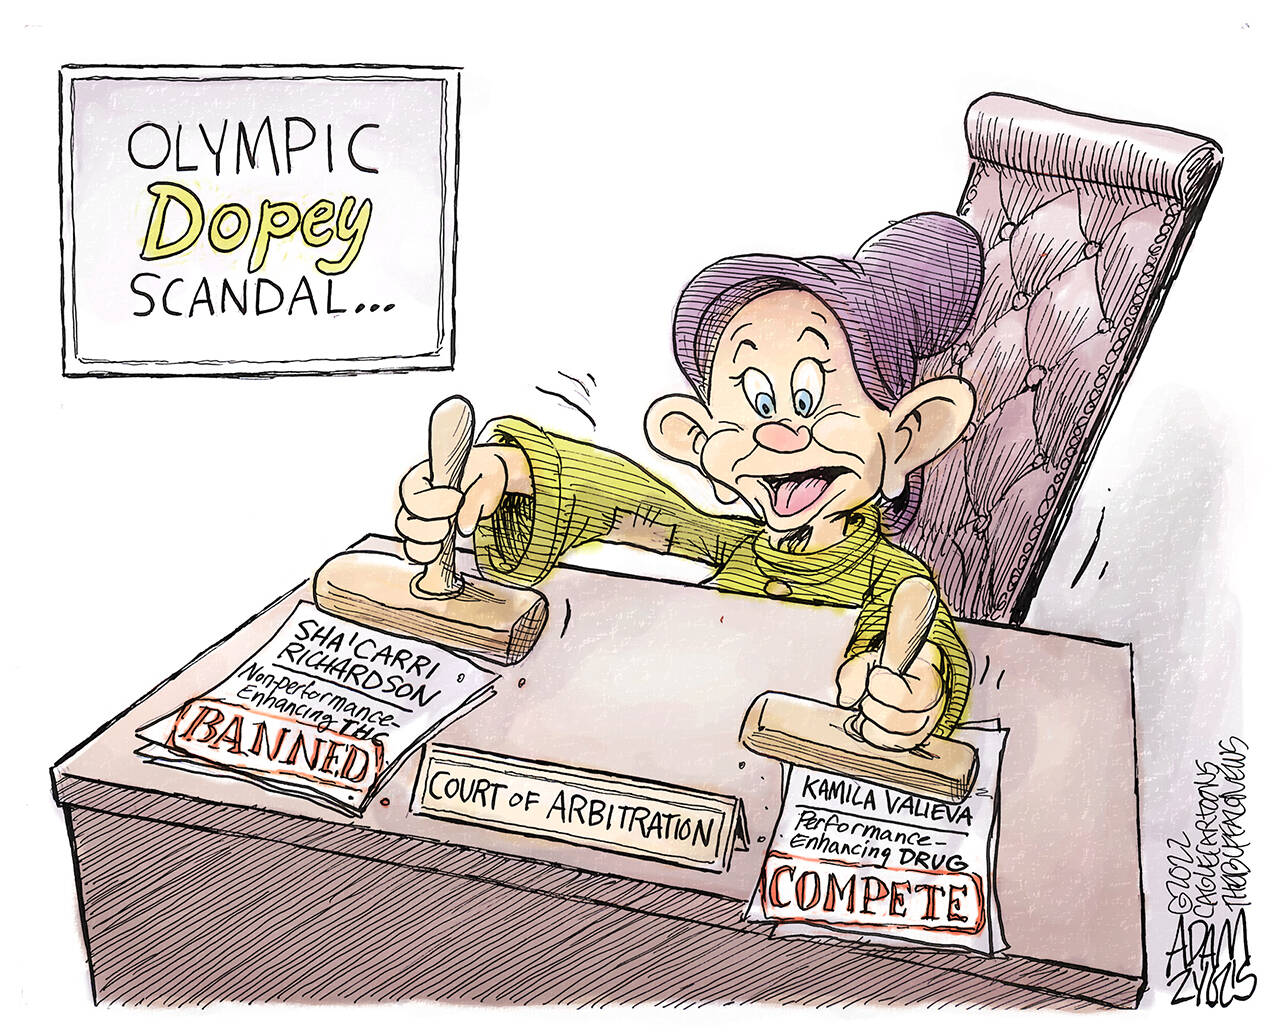 February 17, 2022: Dopey Scandal